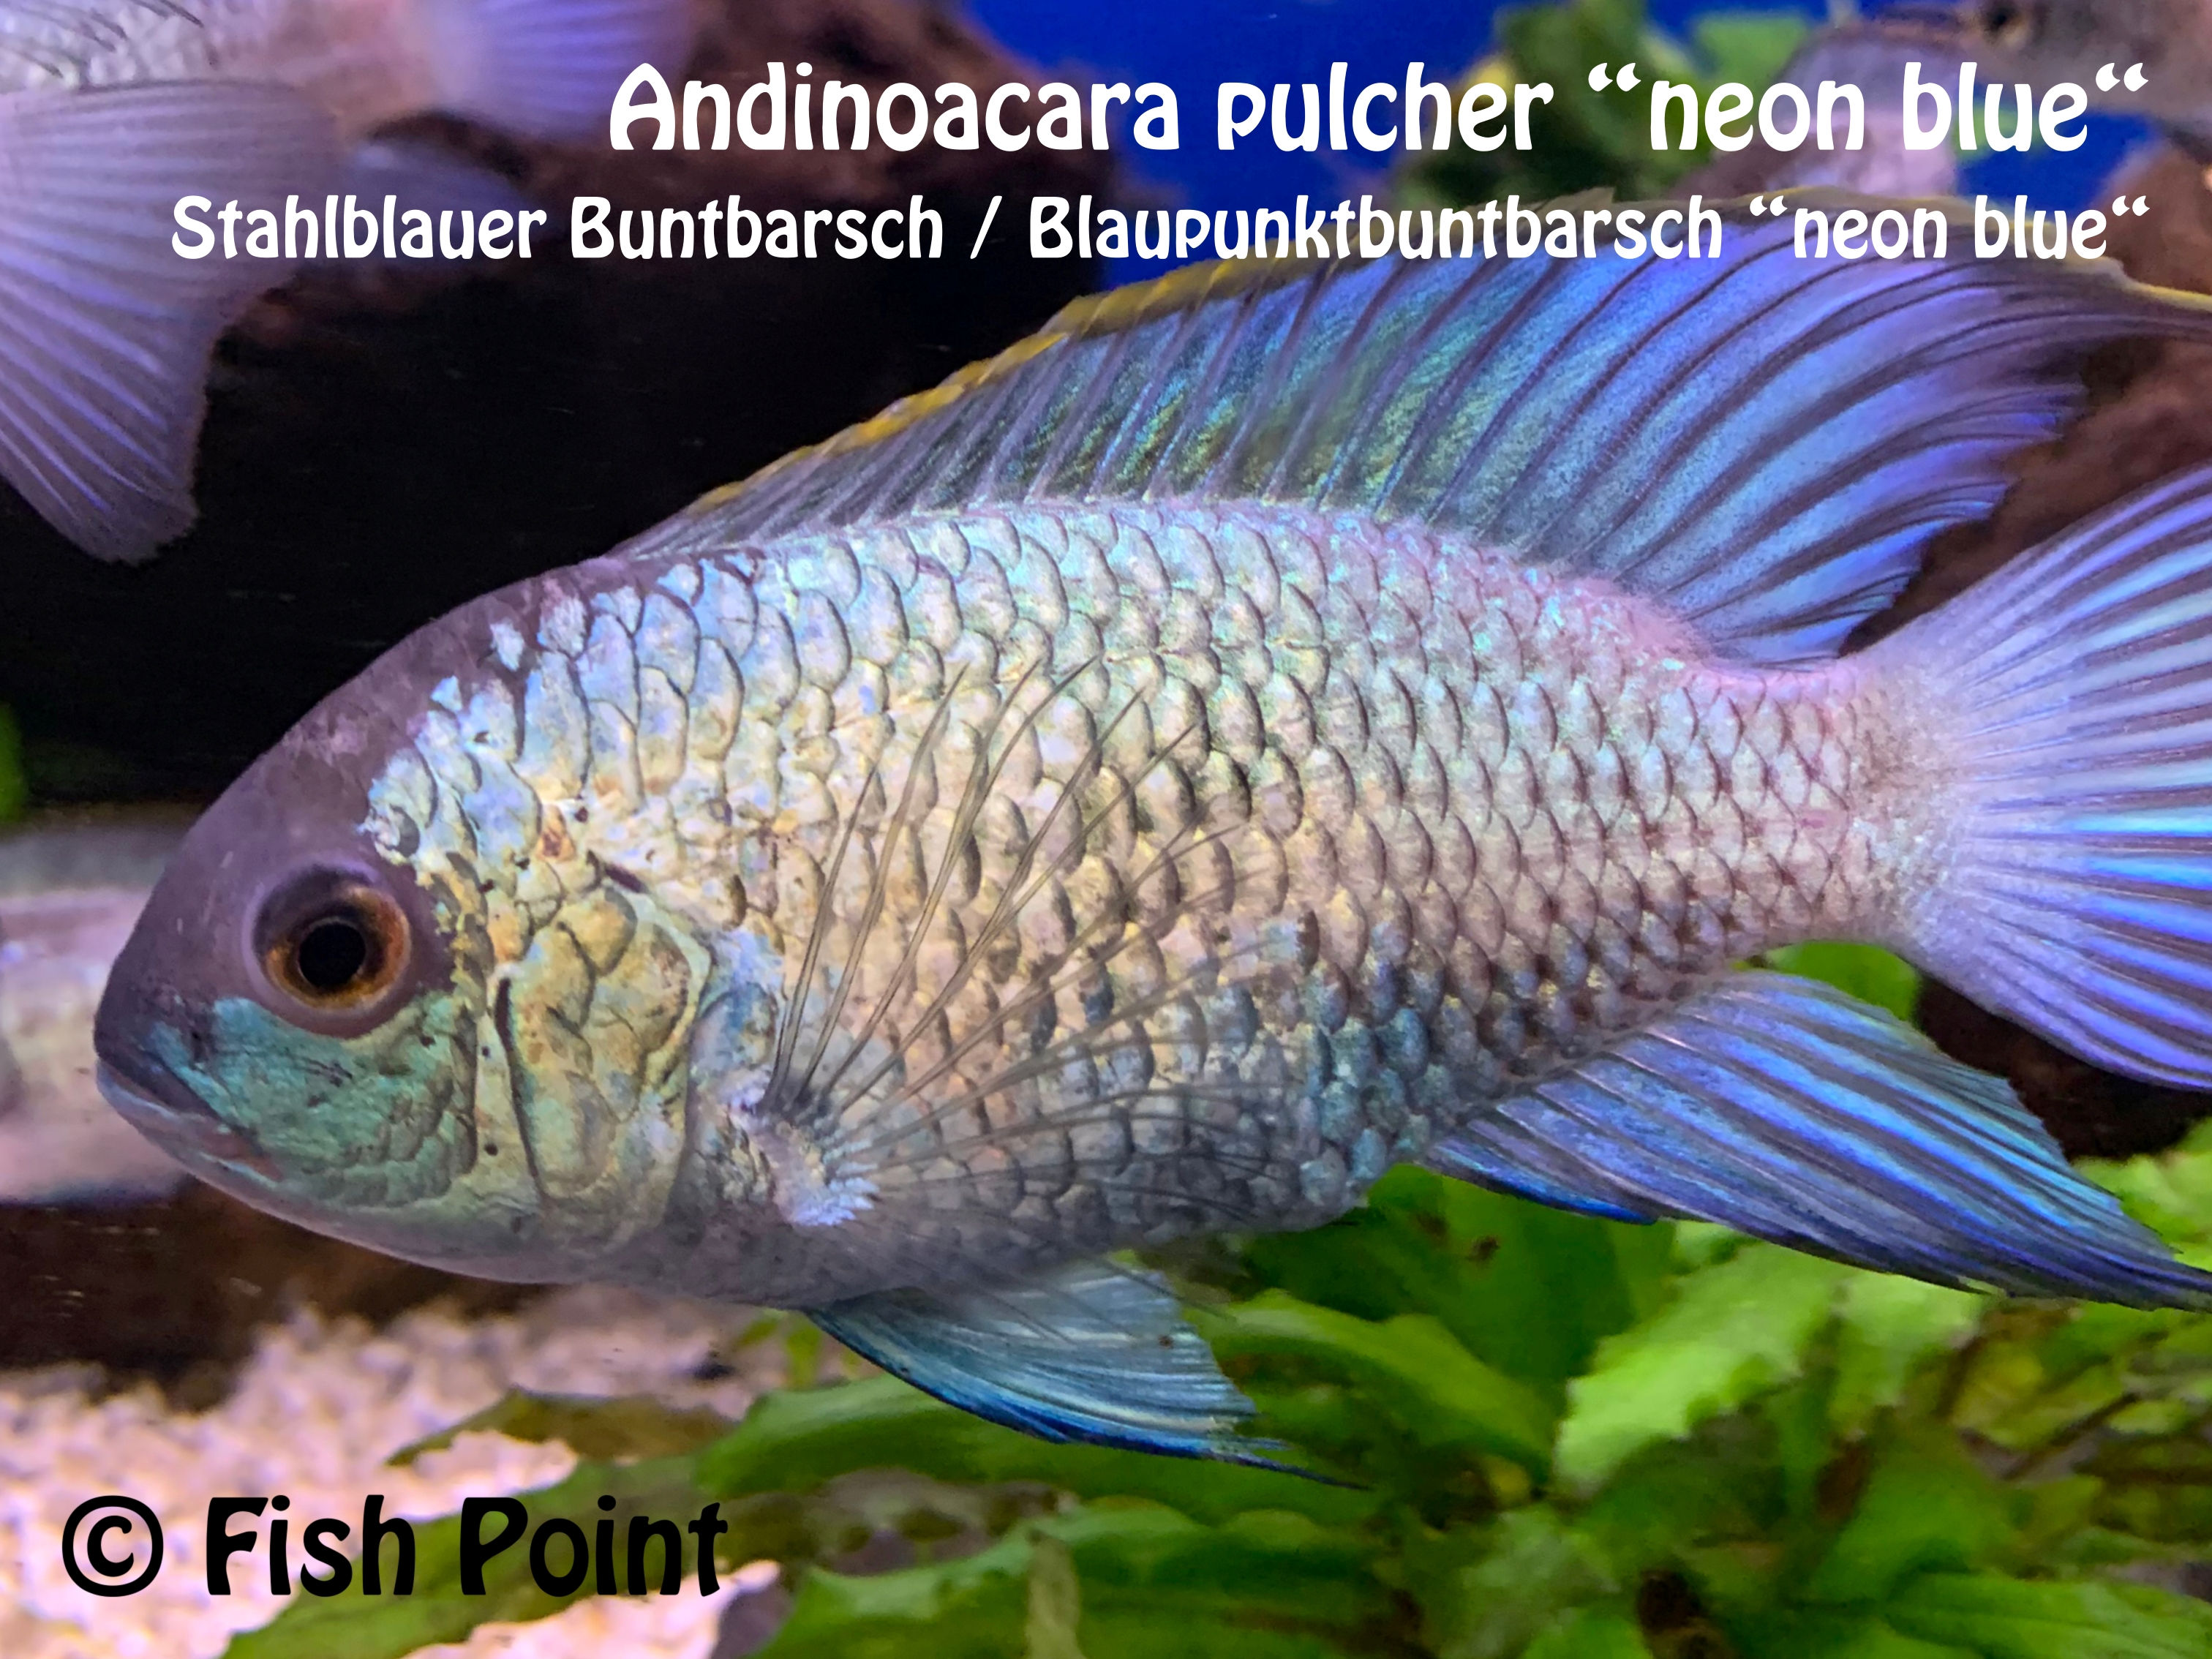 Andinoacara pulcher “neon blue“